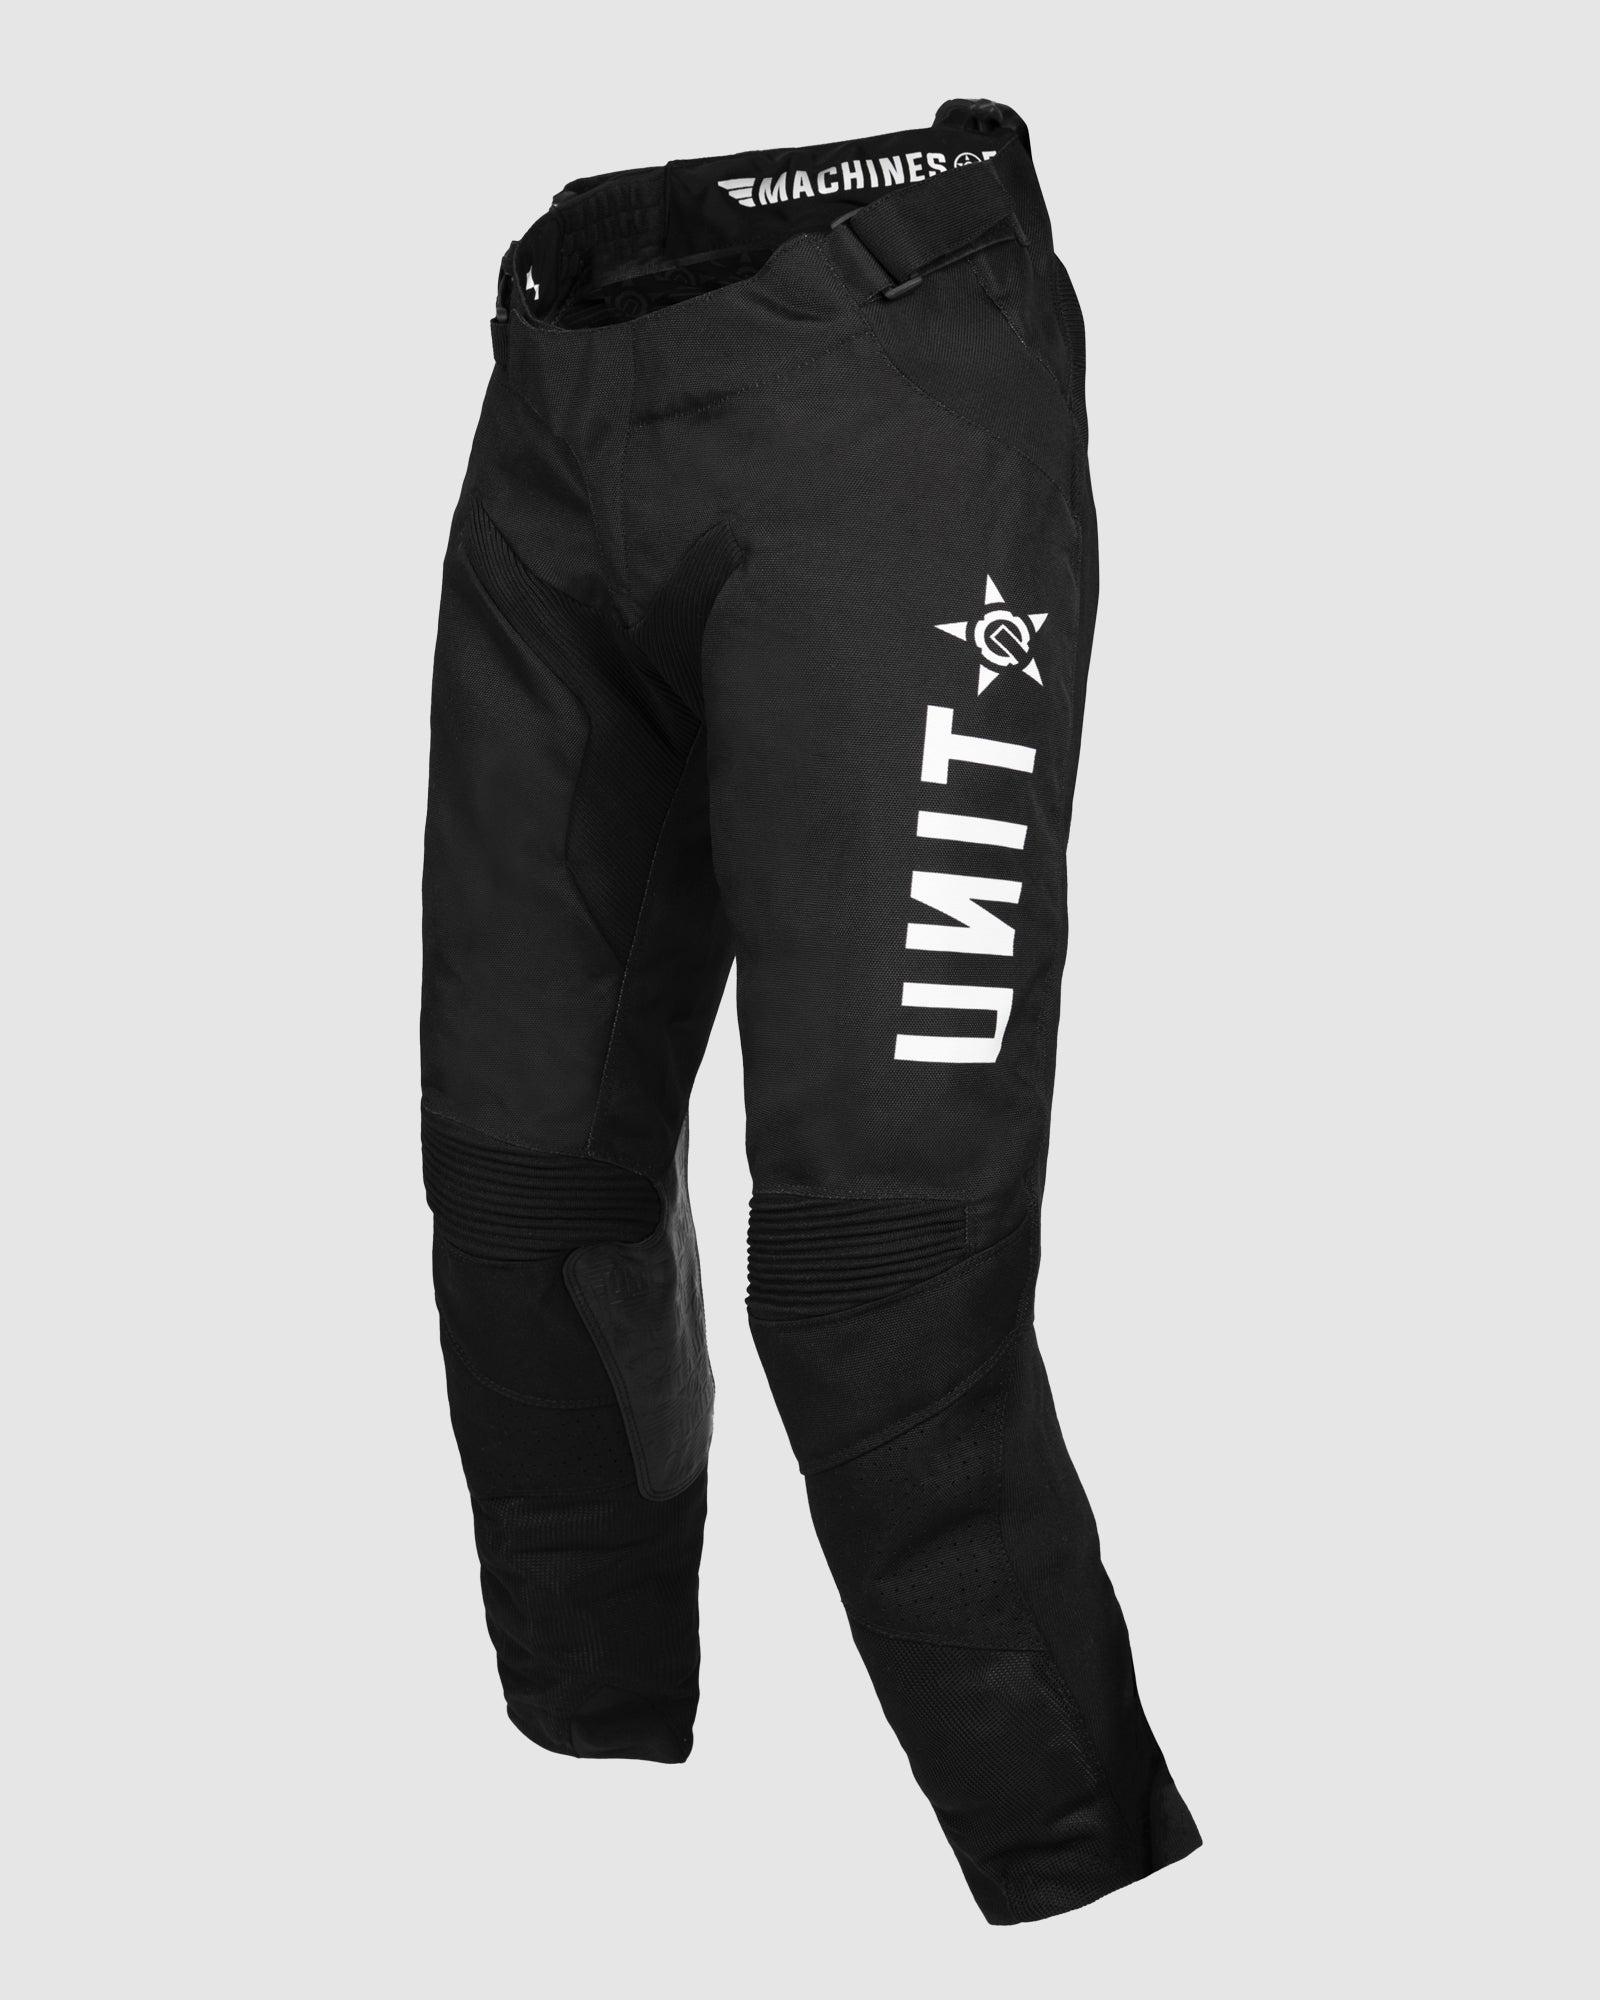 MX Pants & Jerseys – Moto Hut